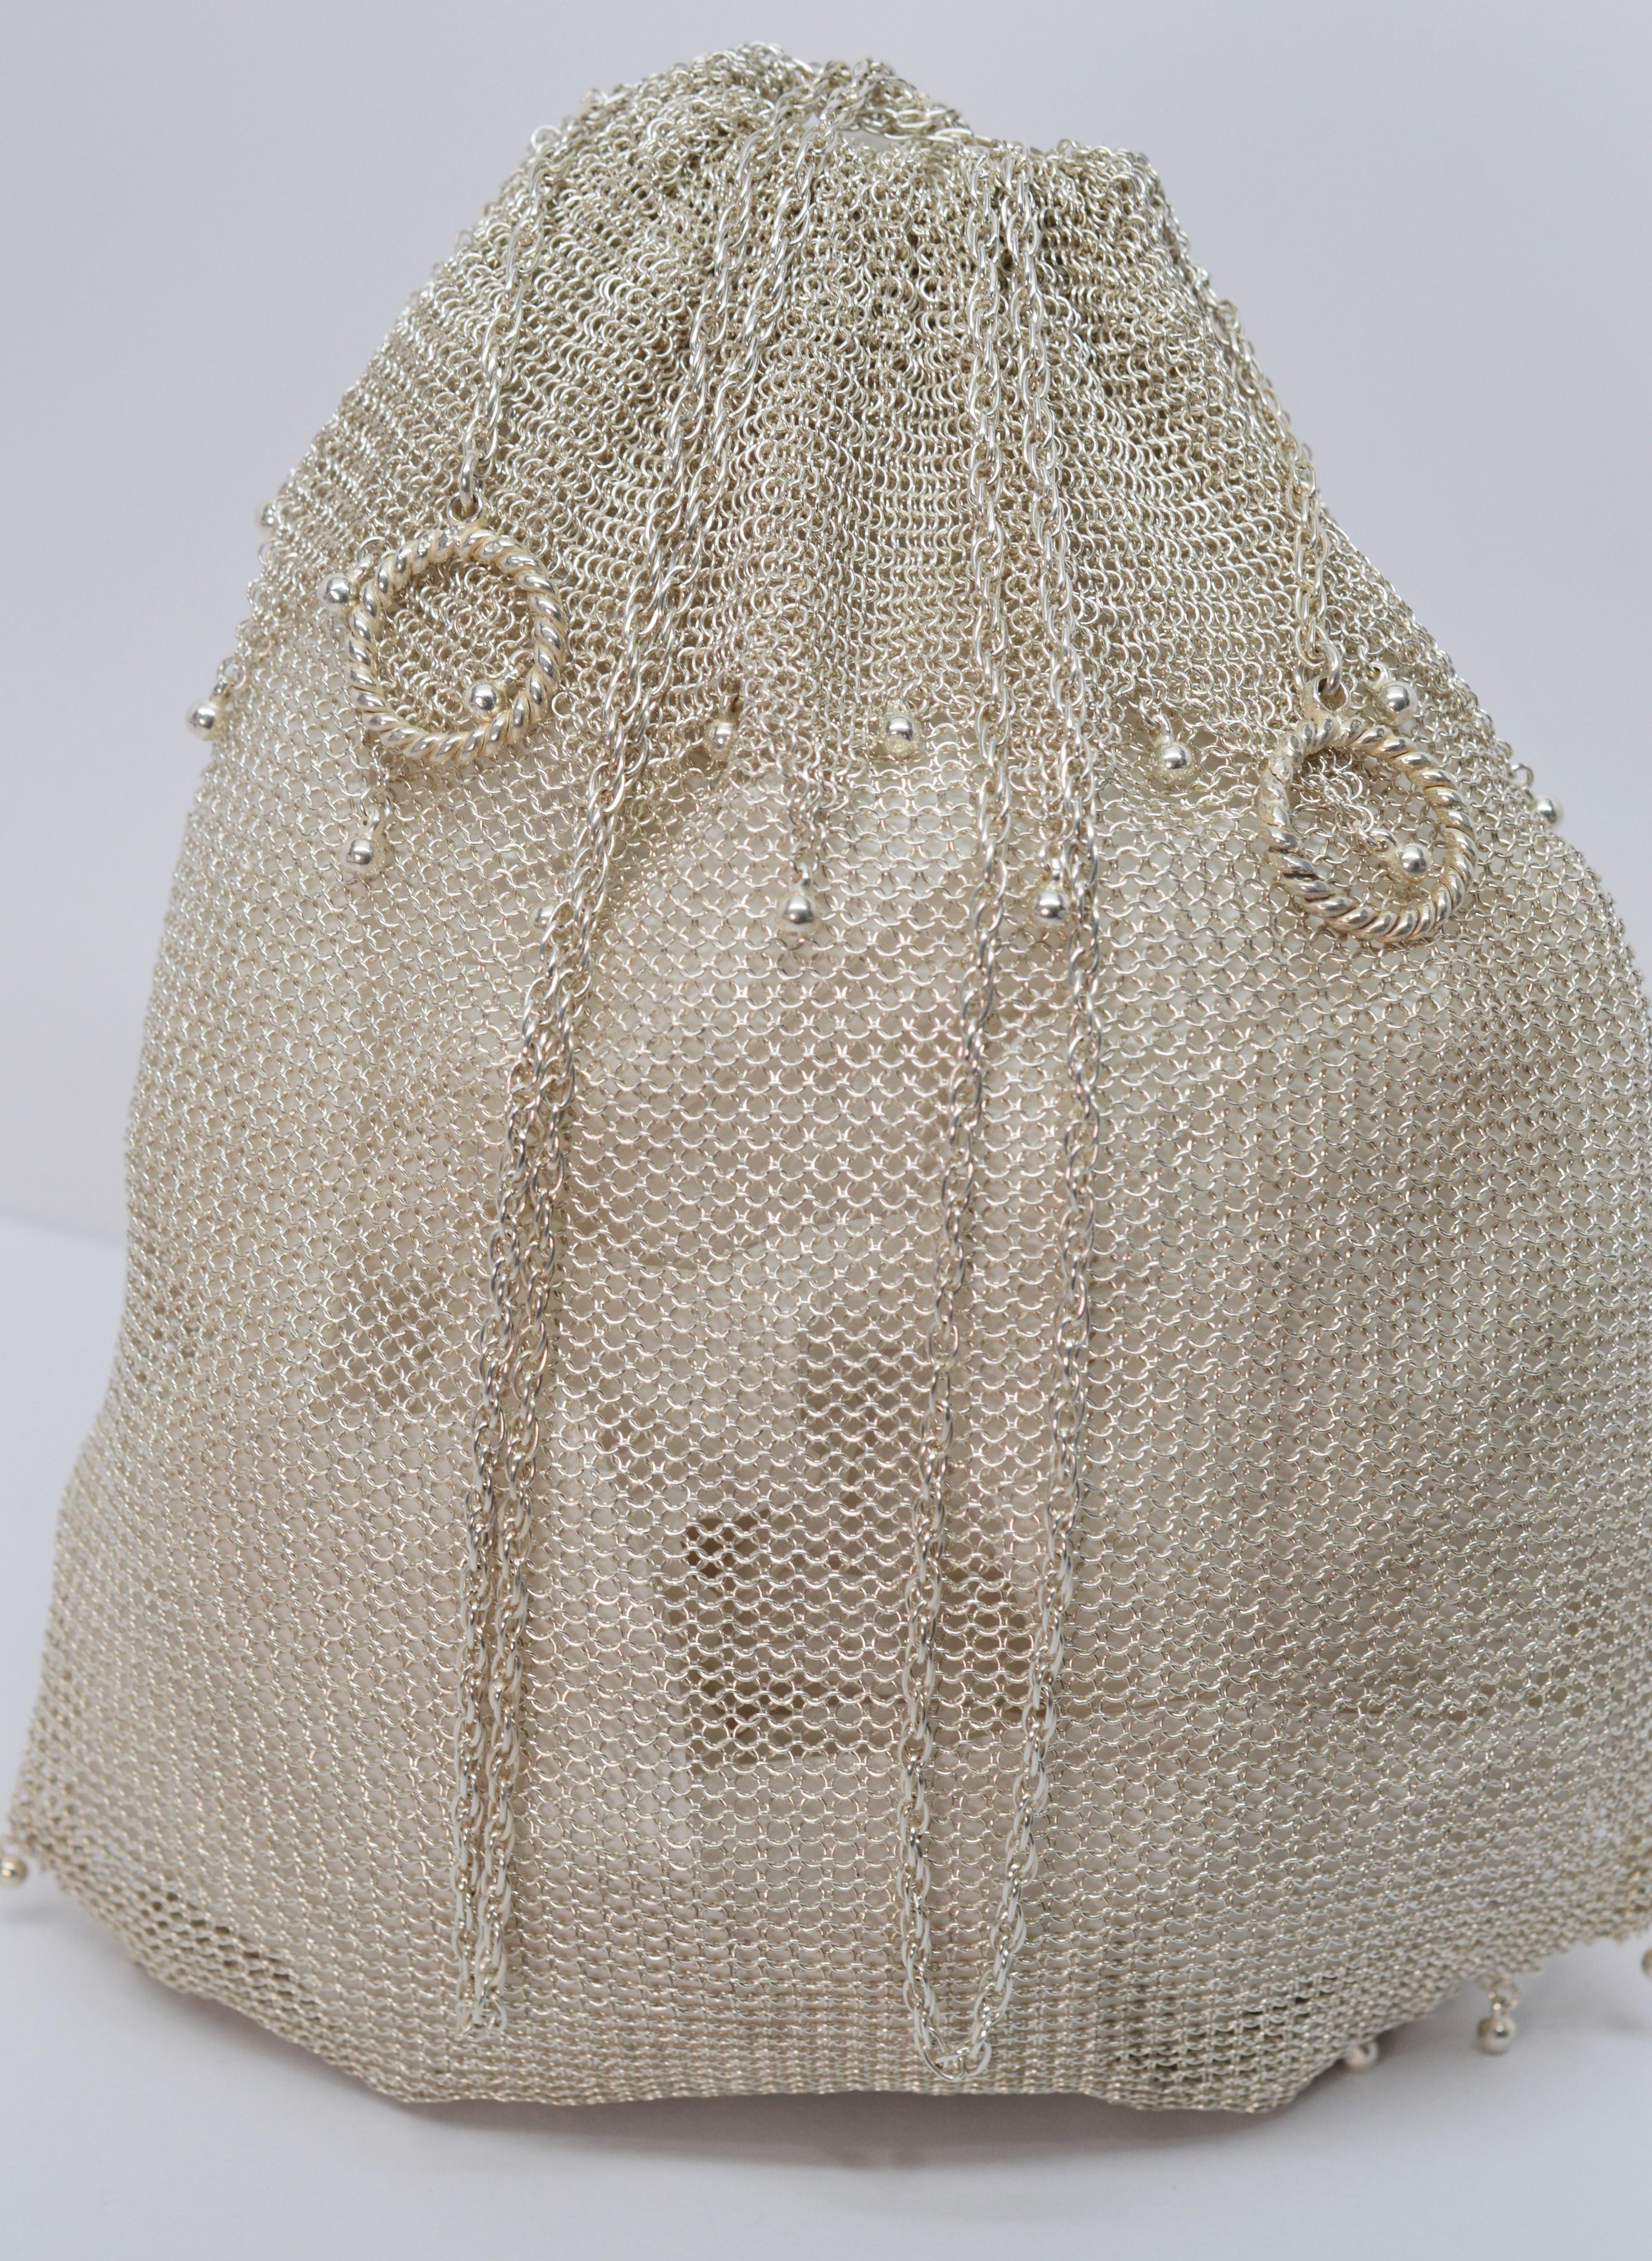 antique silver mesh purse